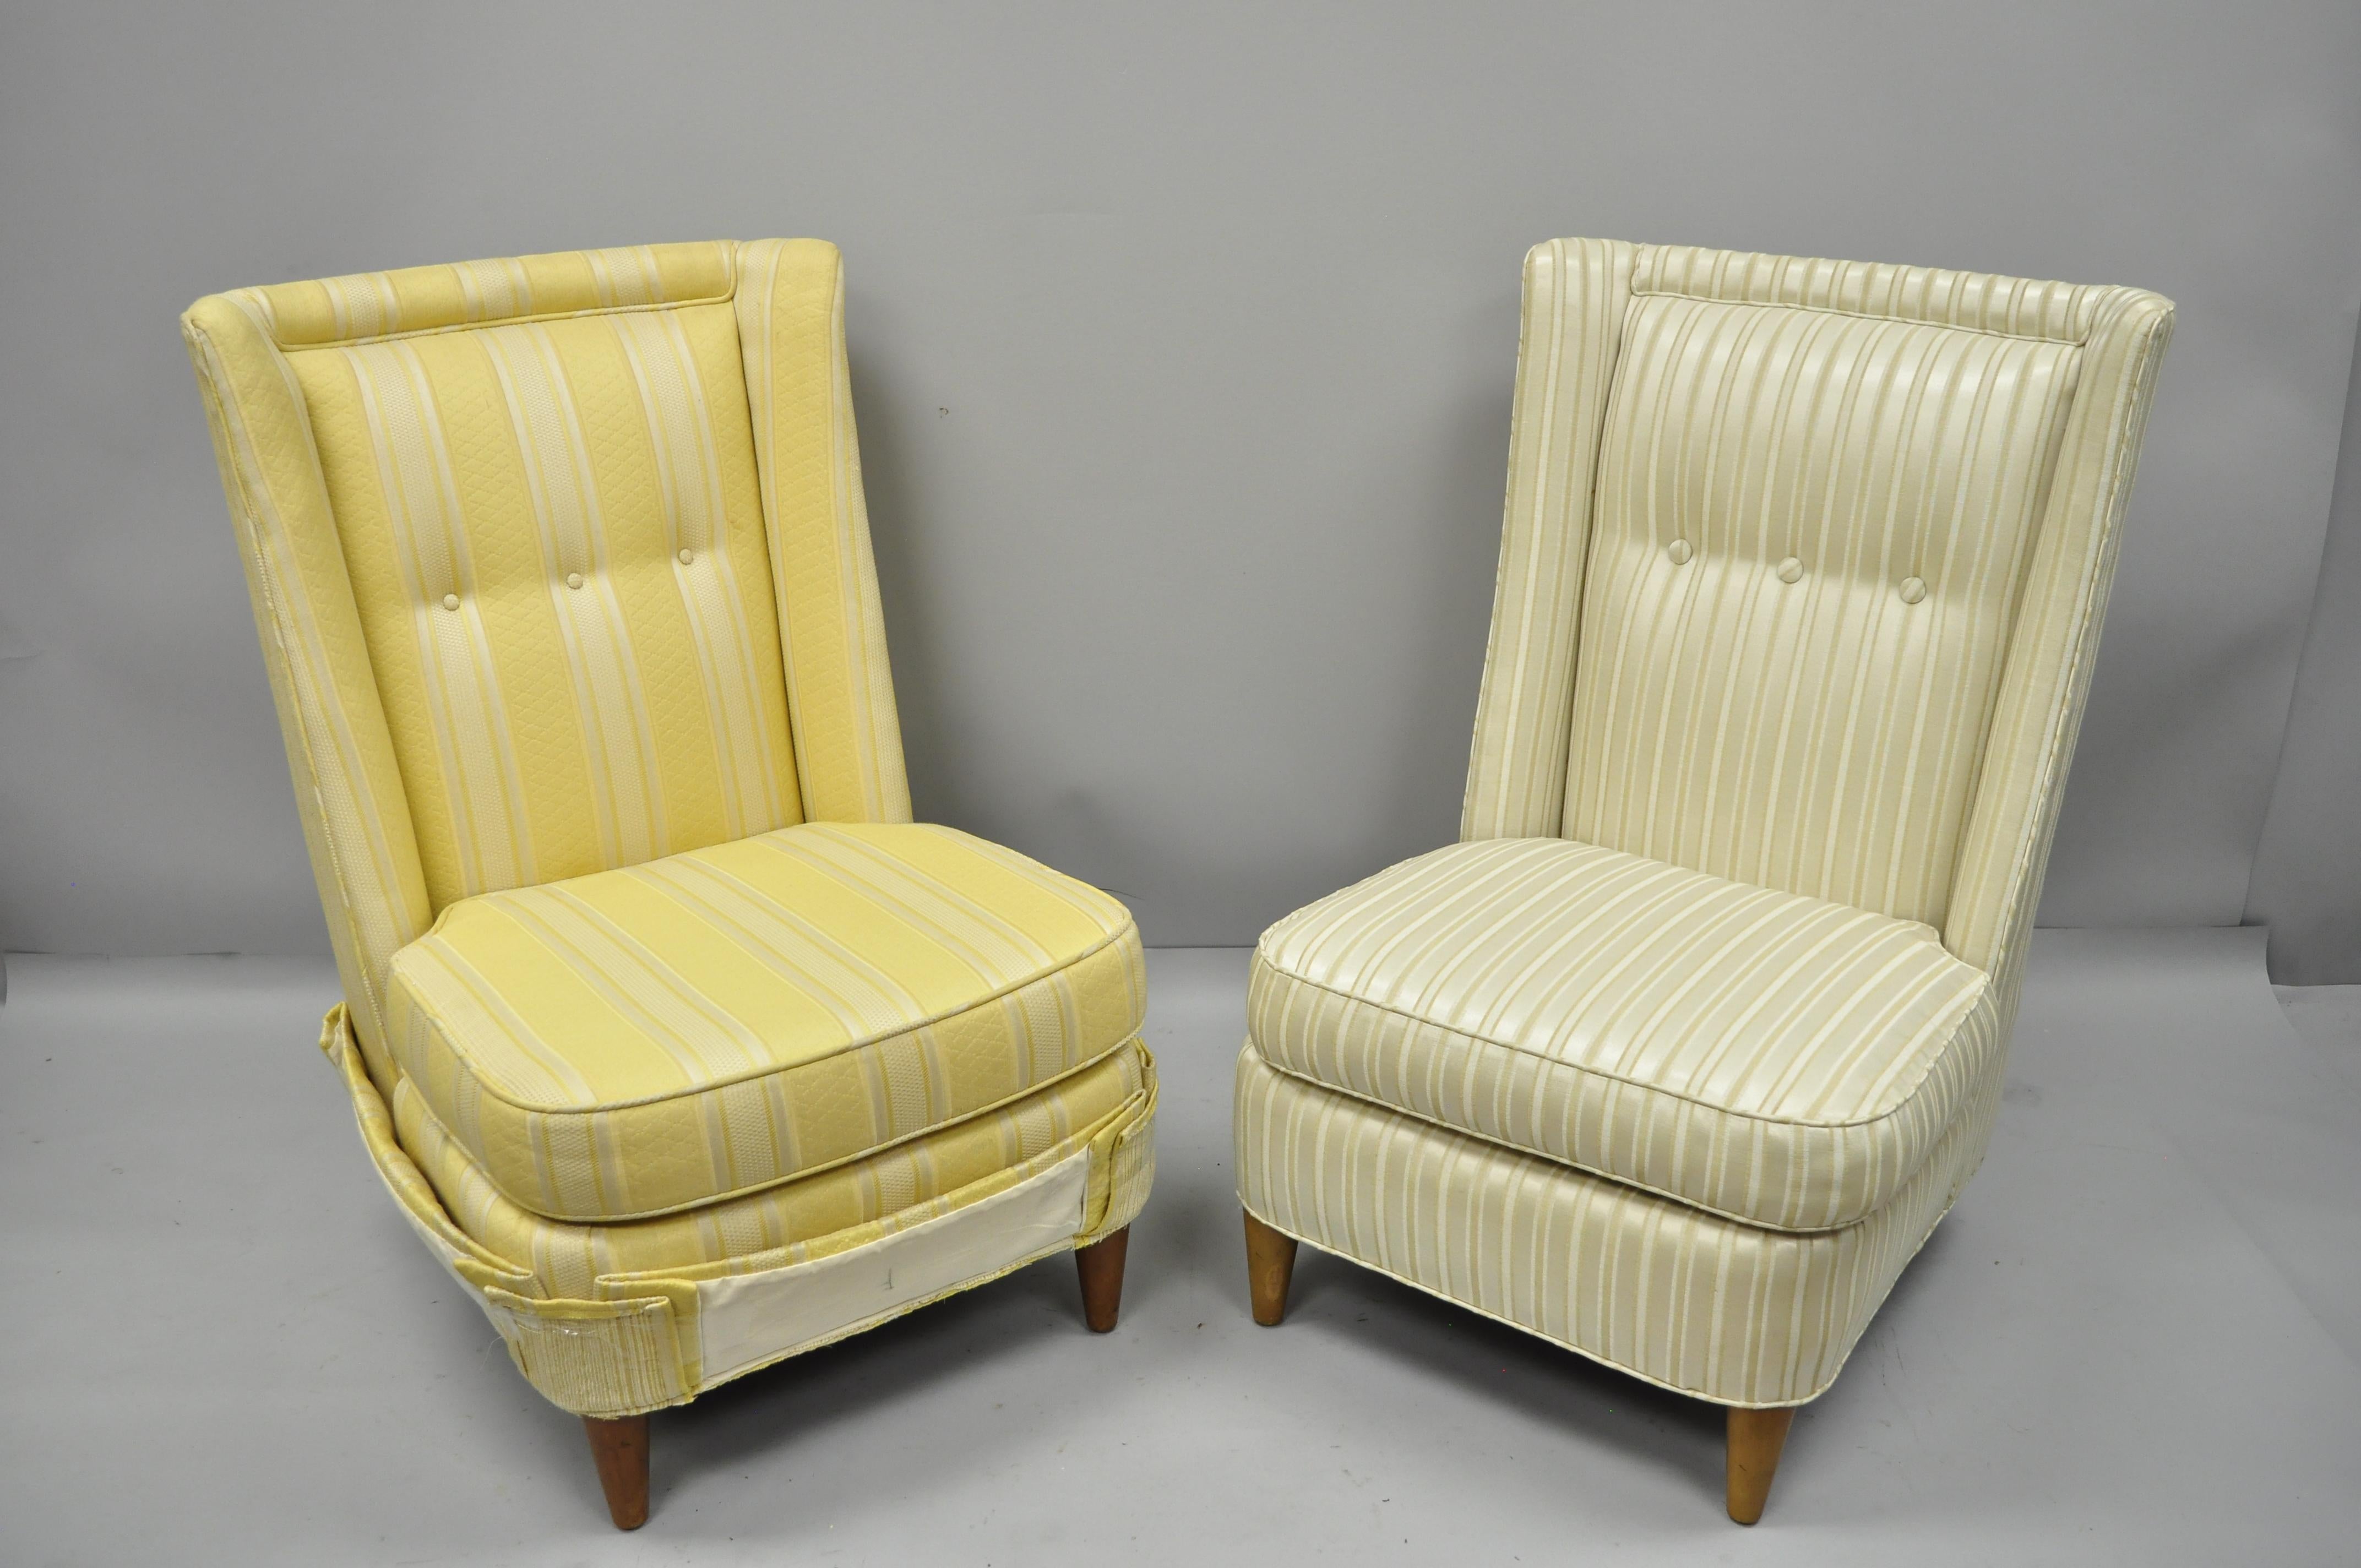 Paul Laszlo Upholstered Slipper Lounge Chair Barrel Back a Pair For Sale 3